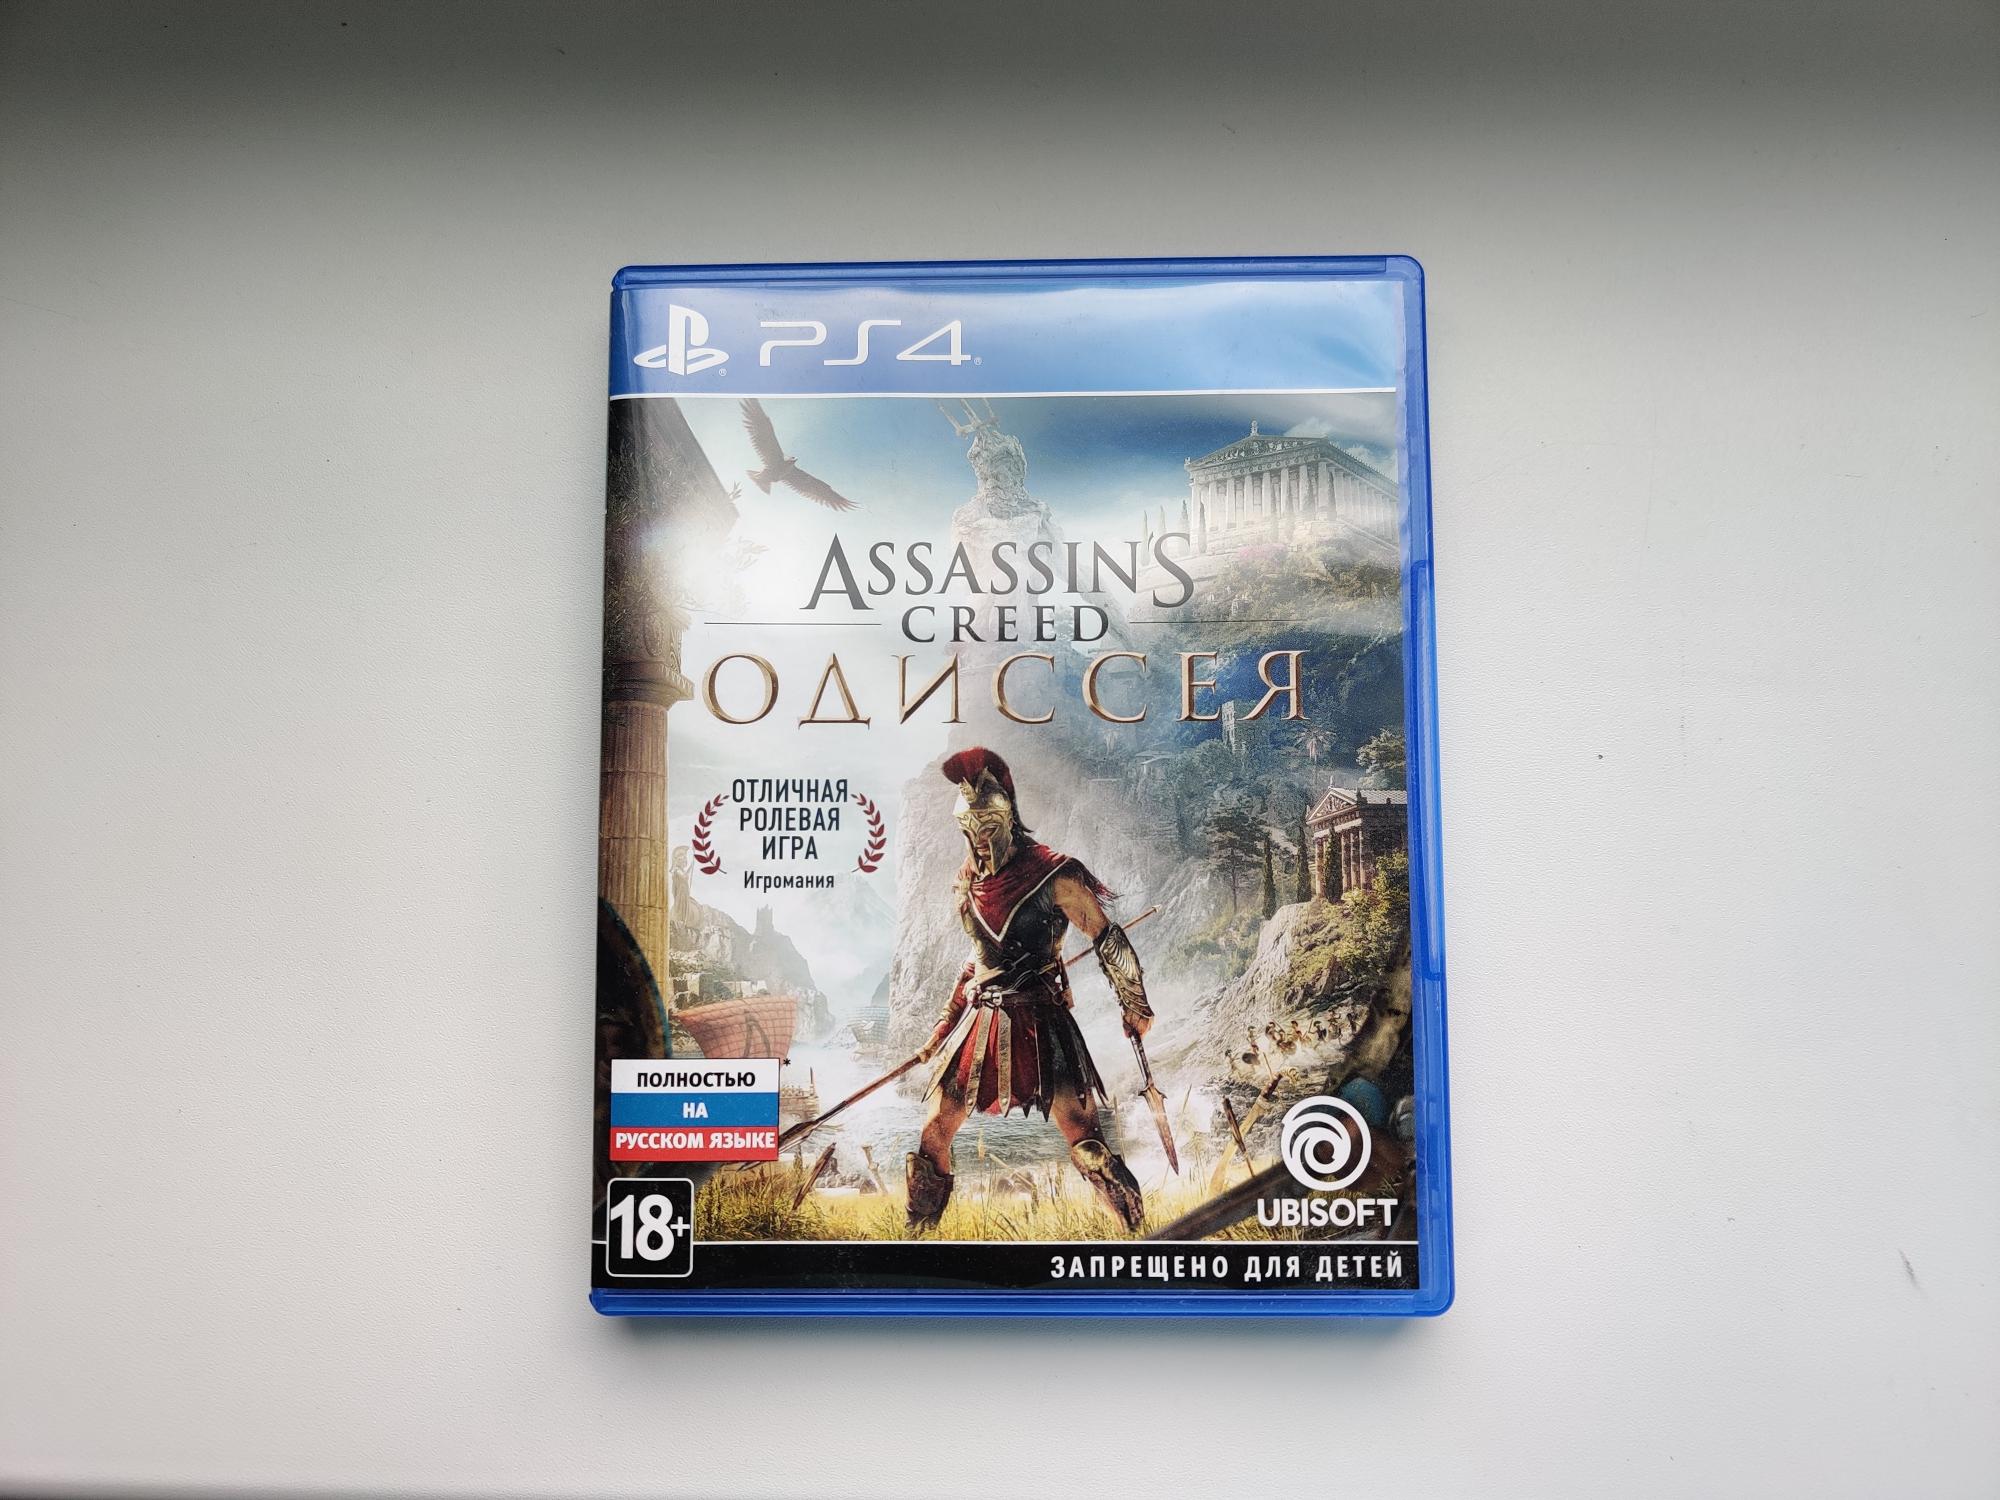 Assassin's Creed Одиссея ps4. Assassin's Creed Odyssey ps4 диск. Одиссея диск ps4. Assassin odyssey ps4